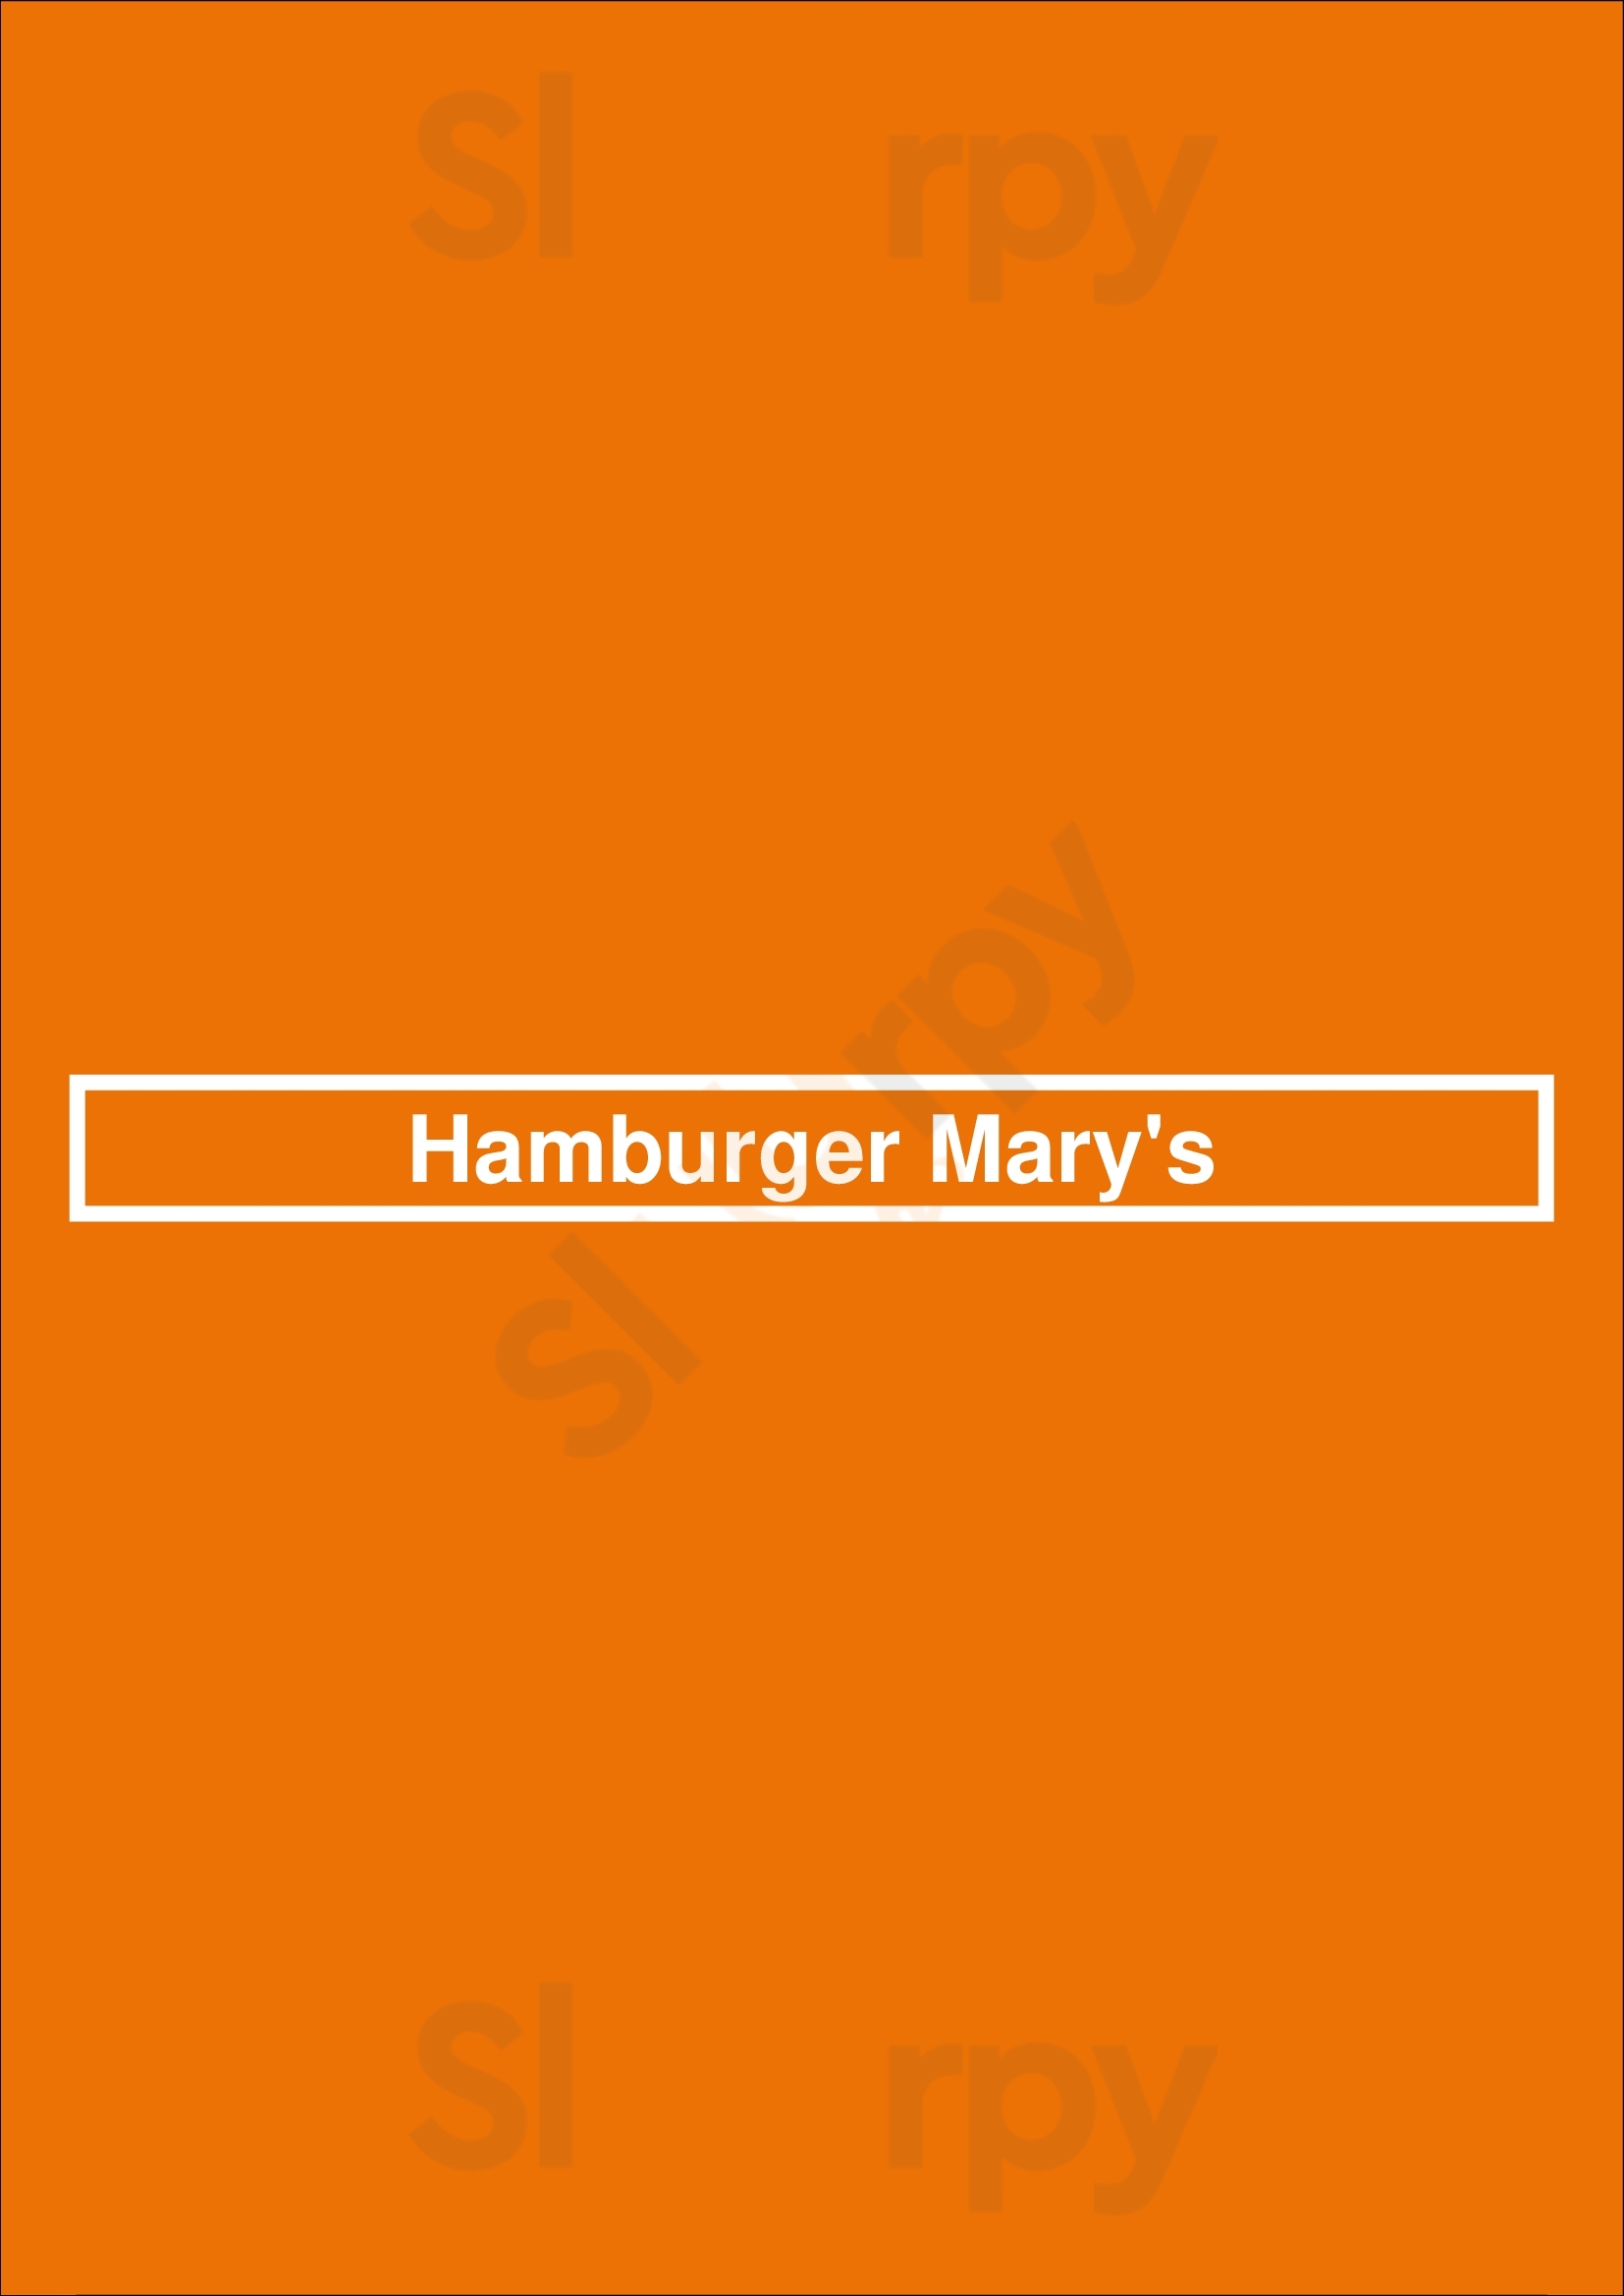 Hamburger Mary's Denver Menu - 1